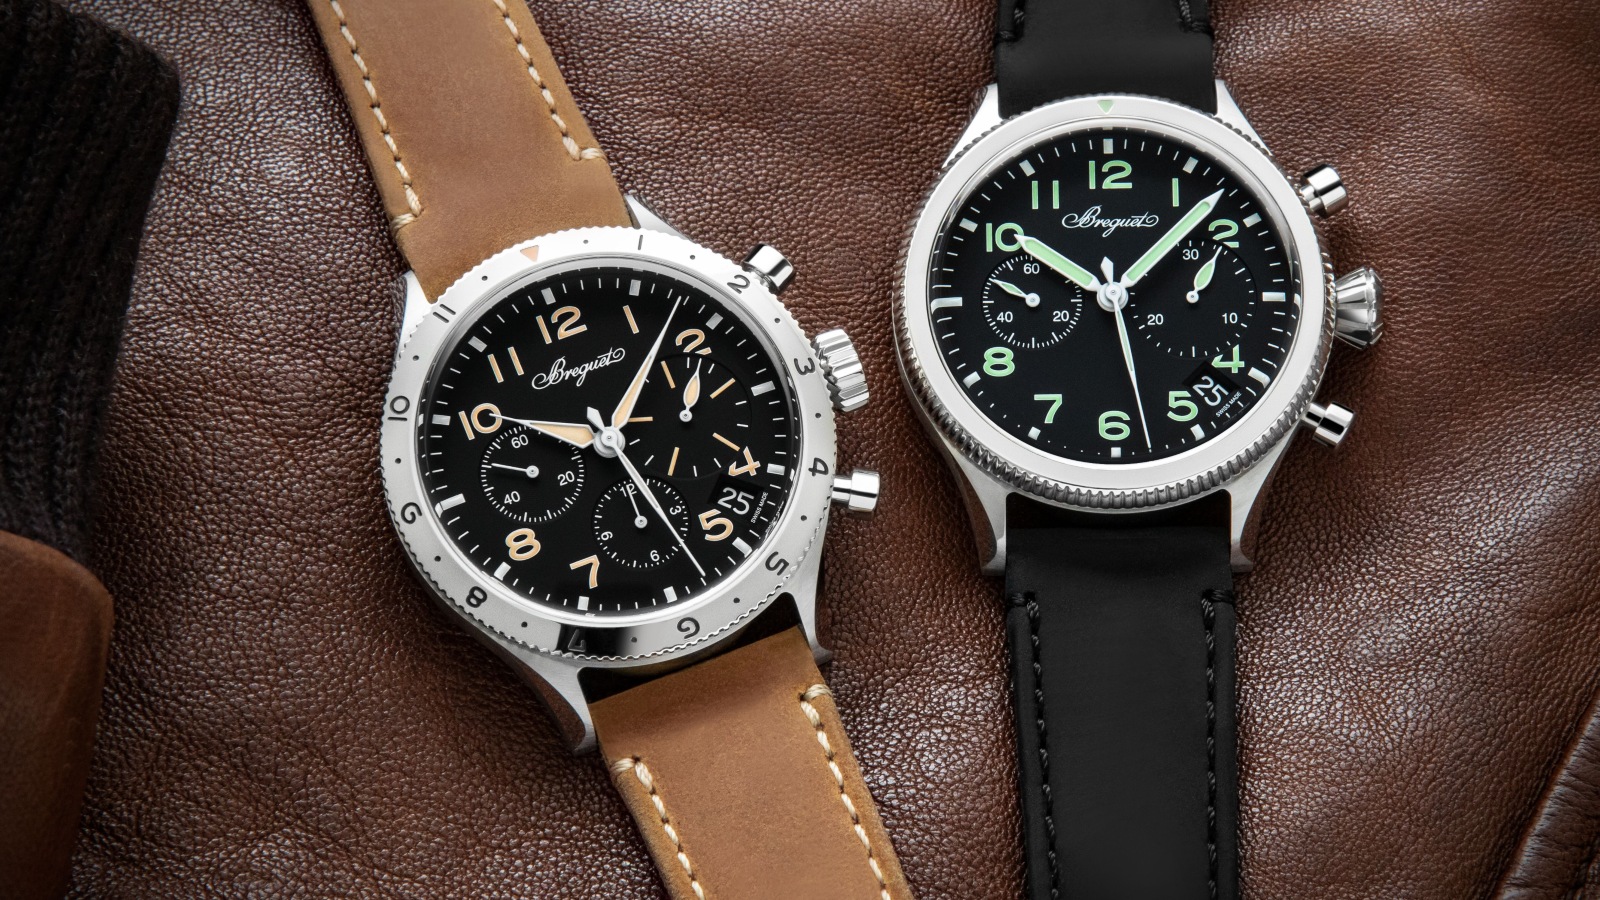 Breguet's Type XX Pilot's Watches Return More Technologically Advanced ...